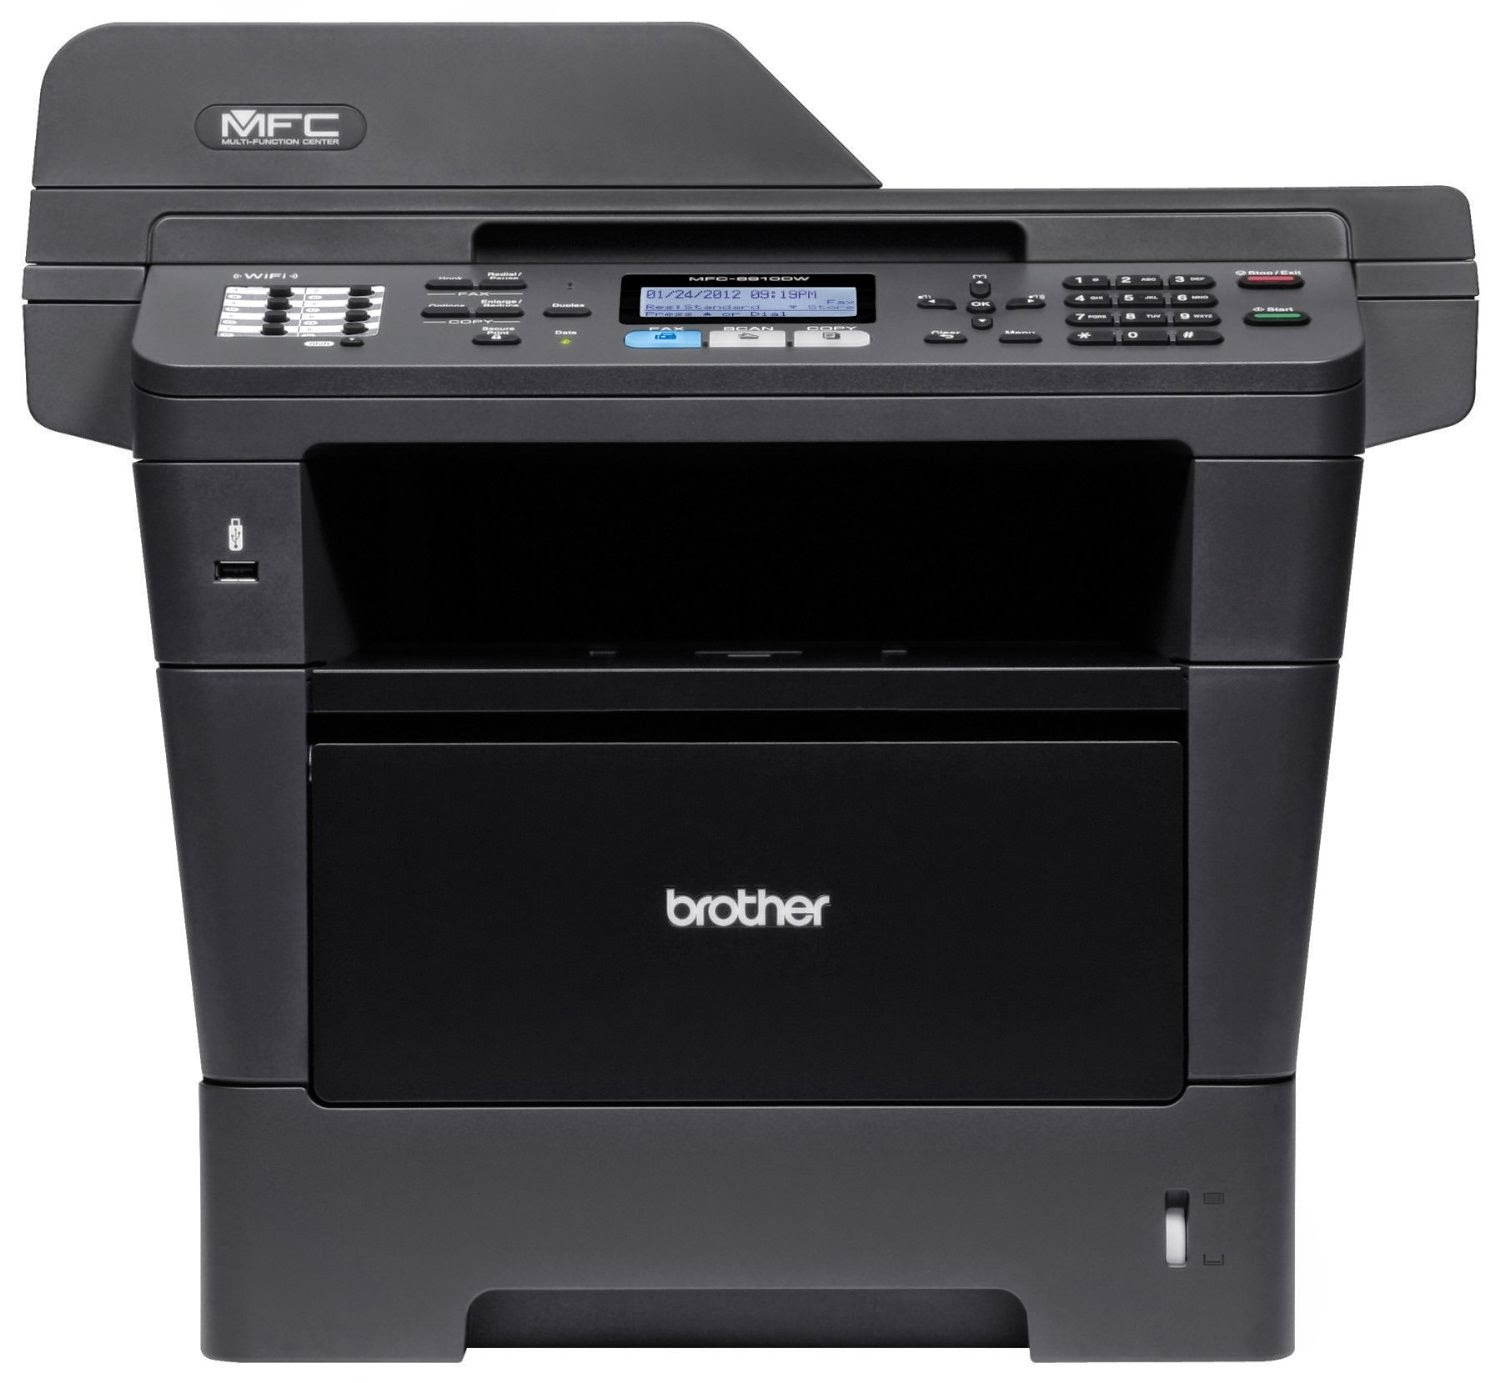 Brother Laser Printer MFC8910DW Wireless Monochrome Printer